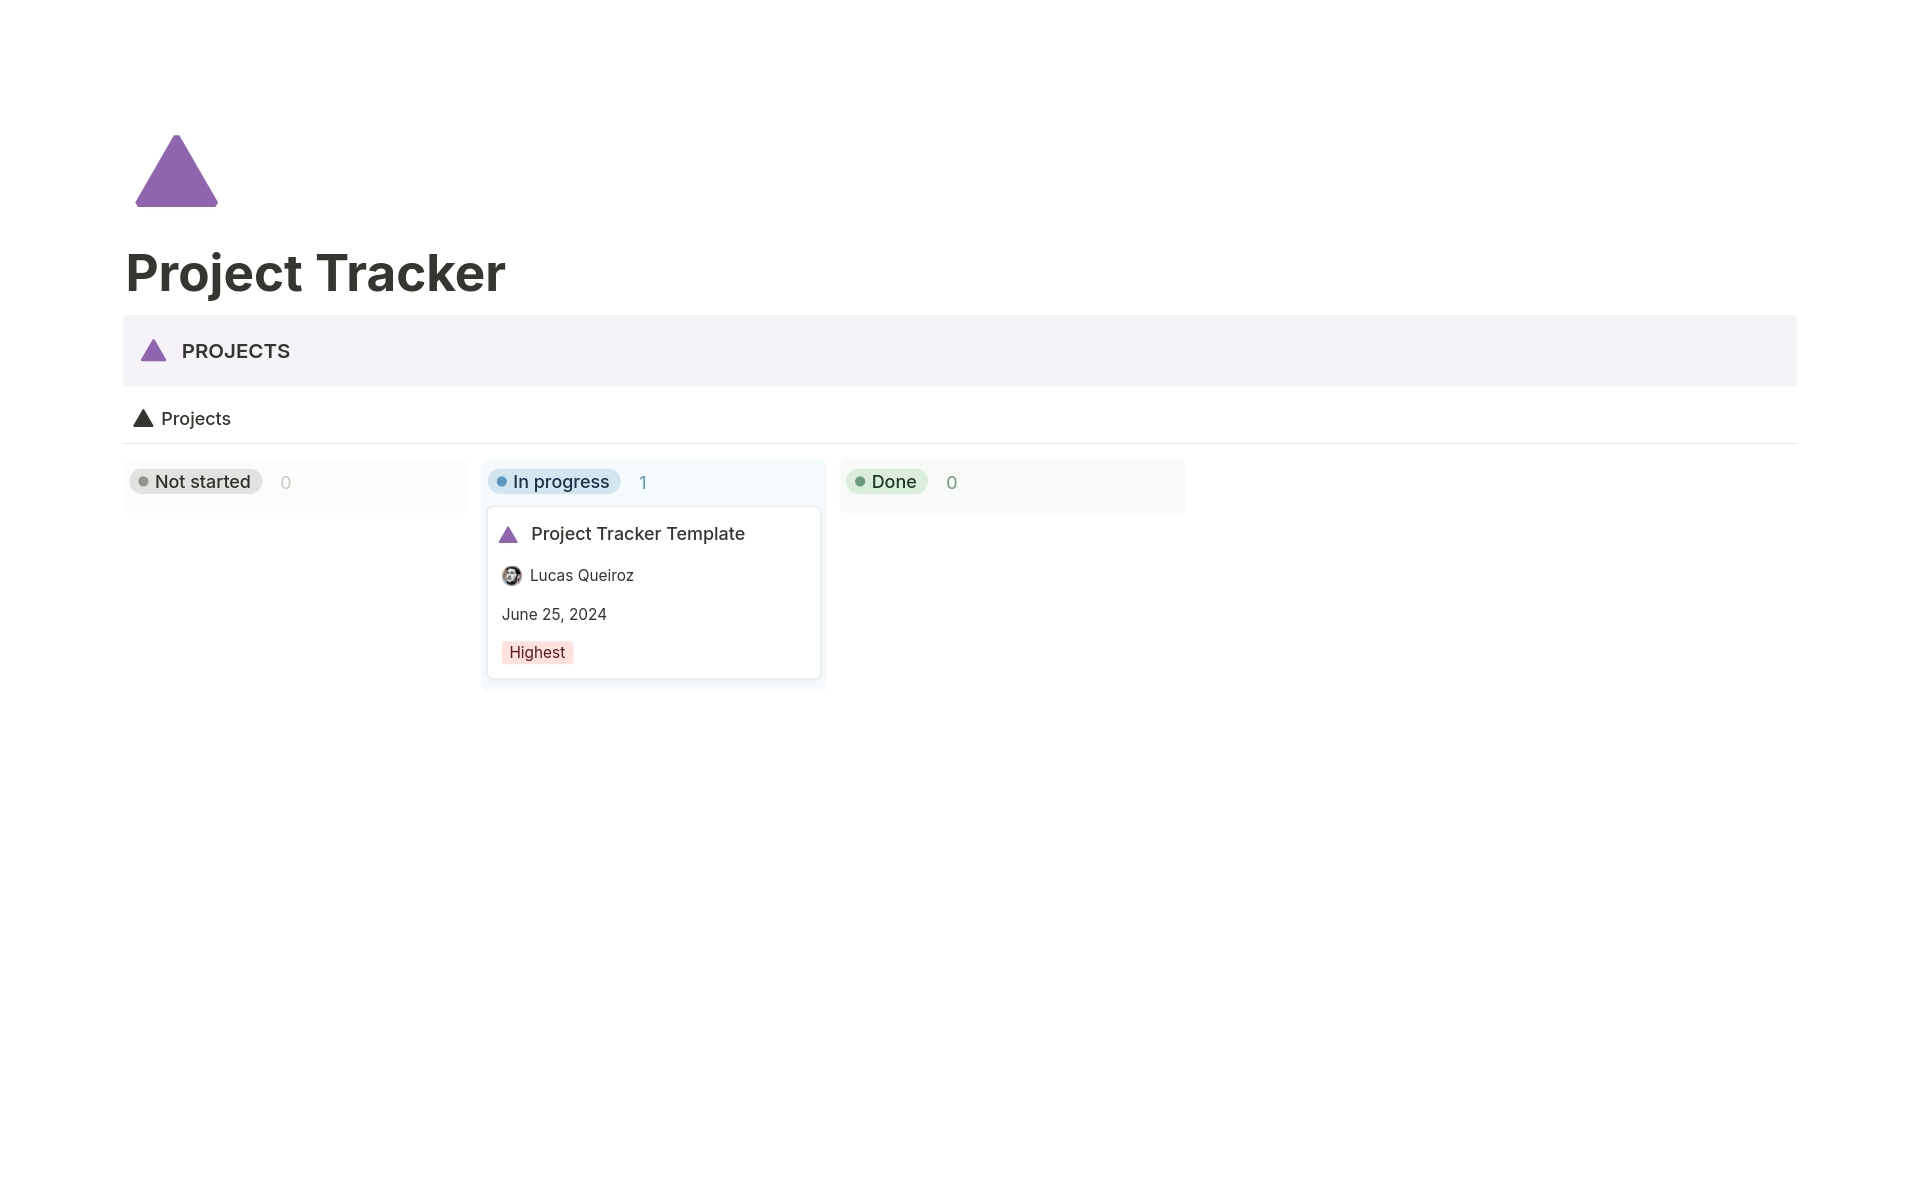 Vista previa de una plantilla para Project Tracker